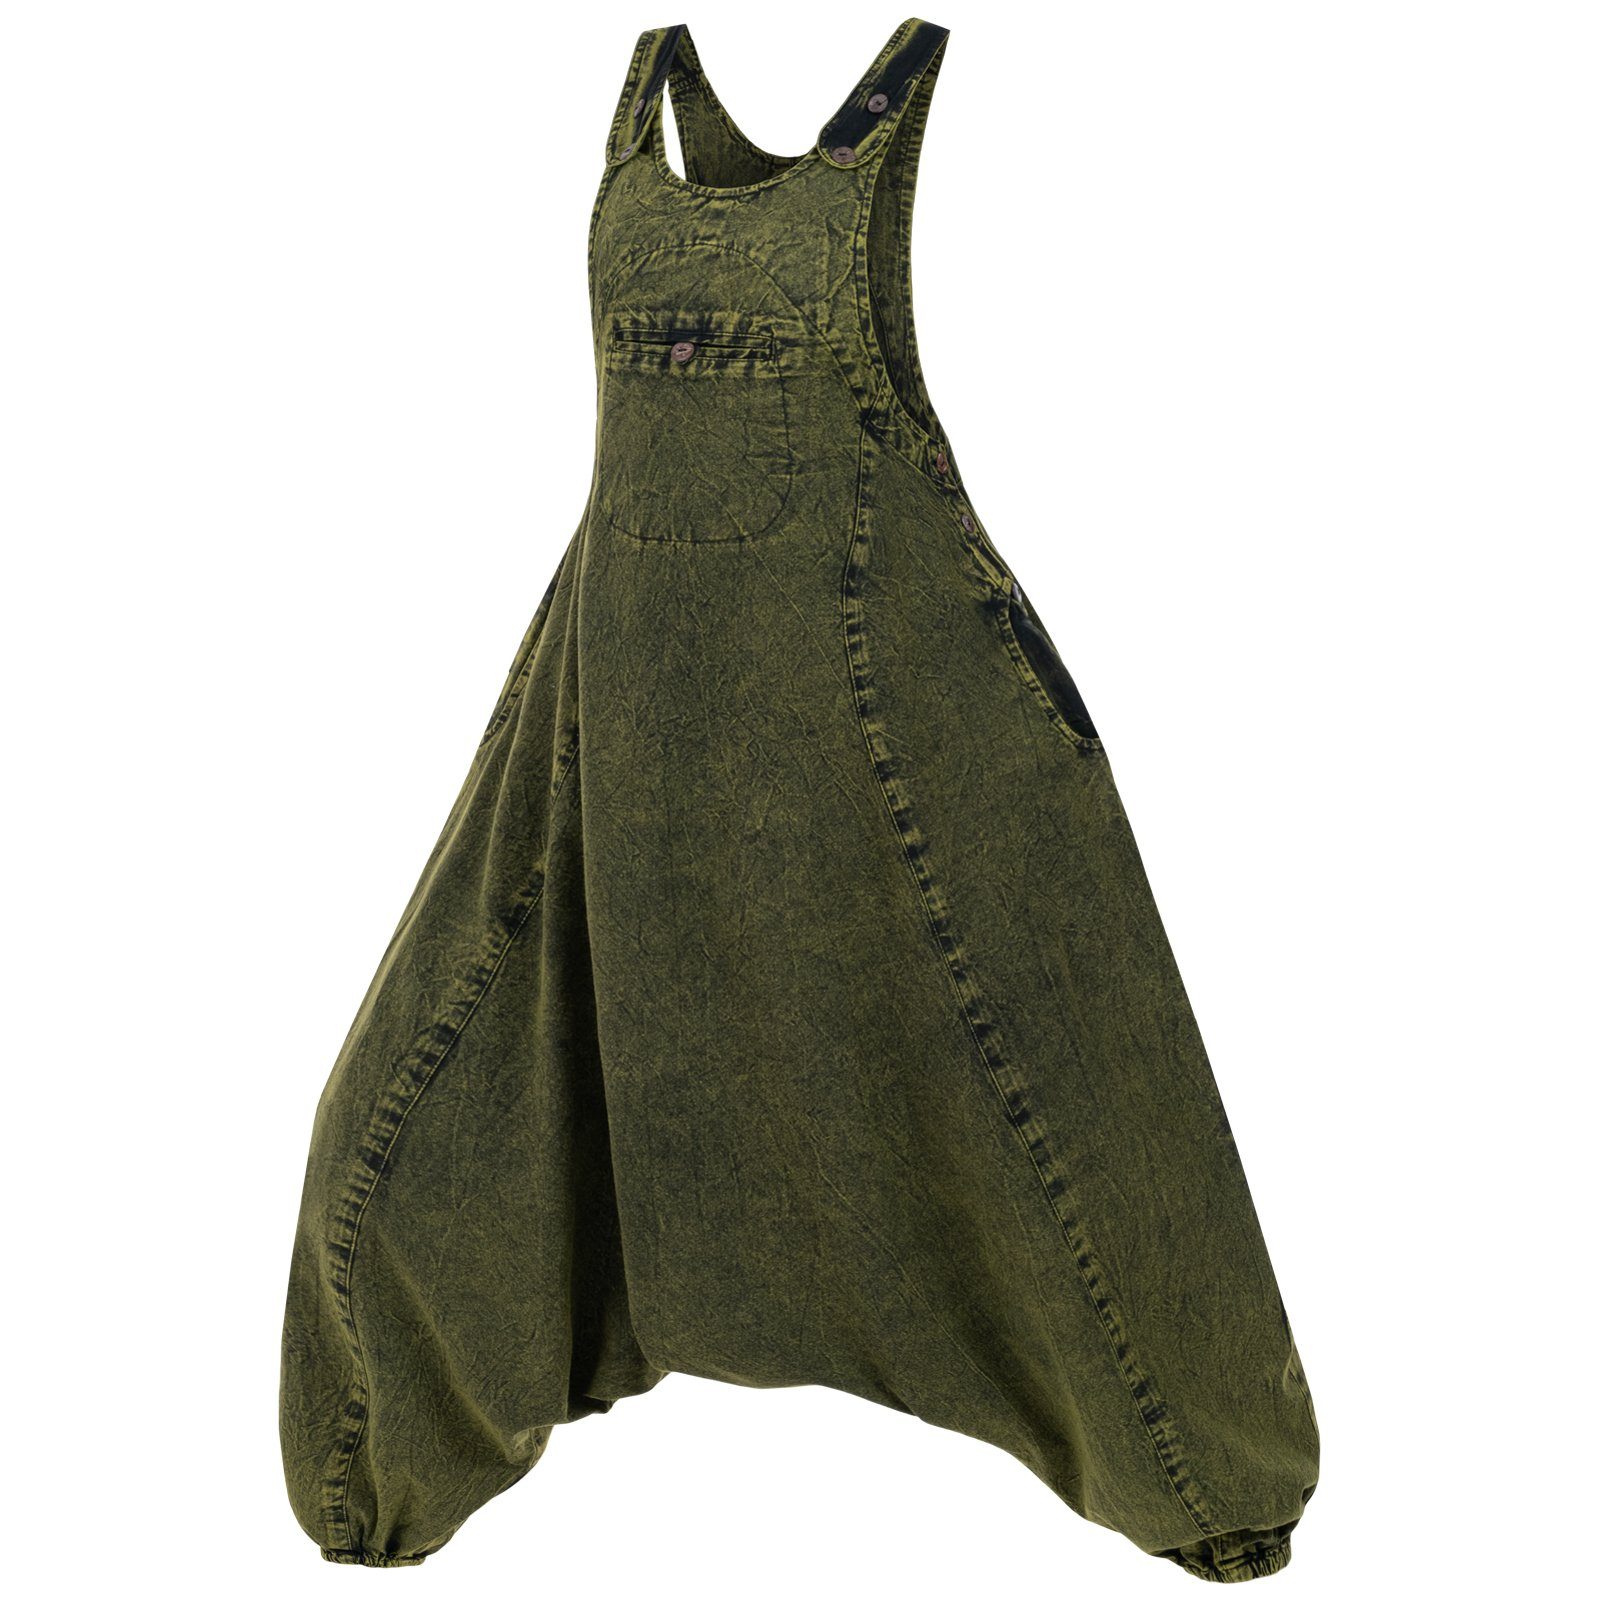 KUNST UND MAGIE Latzhose Hippie Latz/Haremshose Hose 70er Jumpsuit Overall Stonewashed Catsuit Army Green